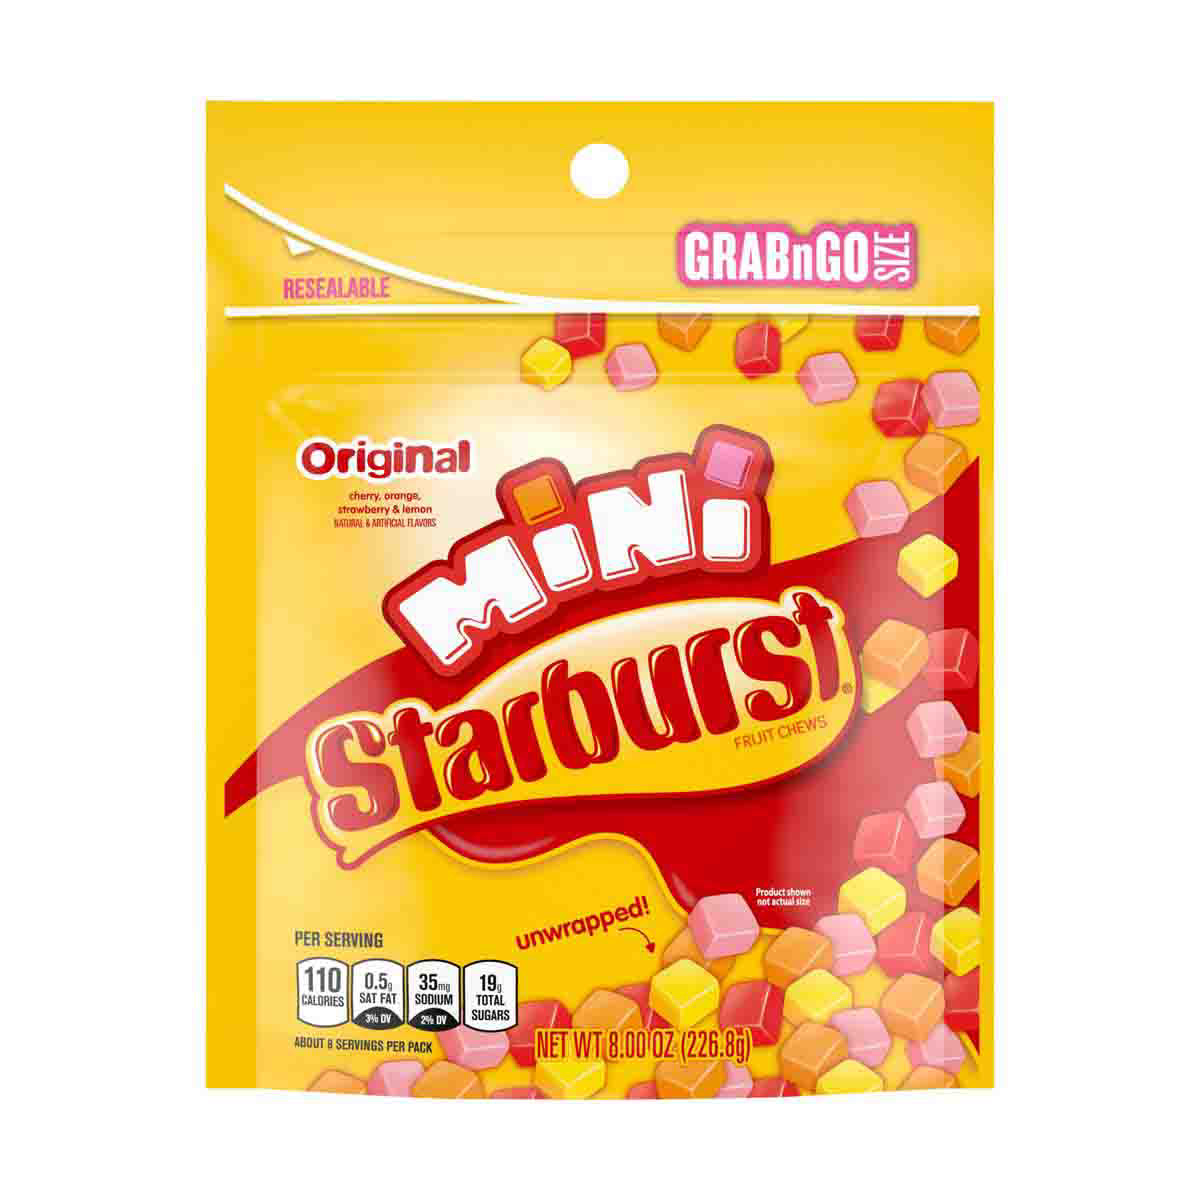 Starburst Original Minis Fruit Chews Candy Grab N Go Resealable Bag, 8 oz.